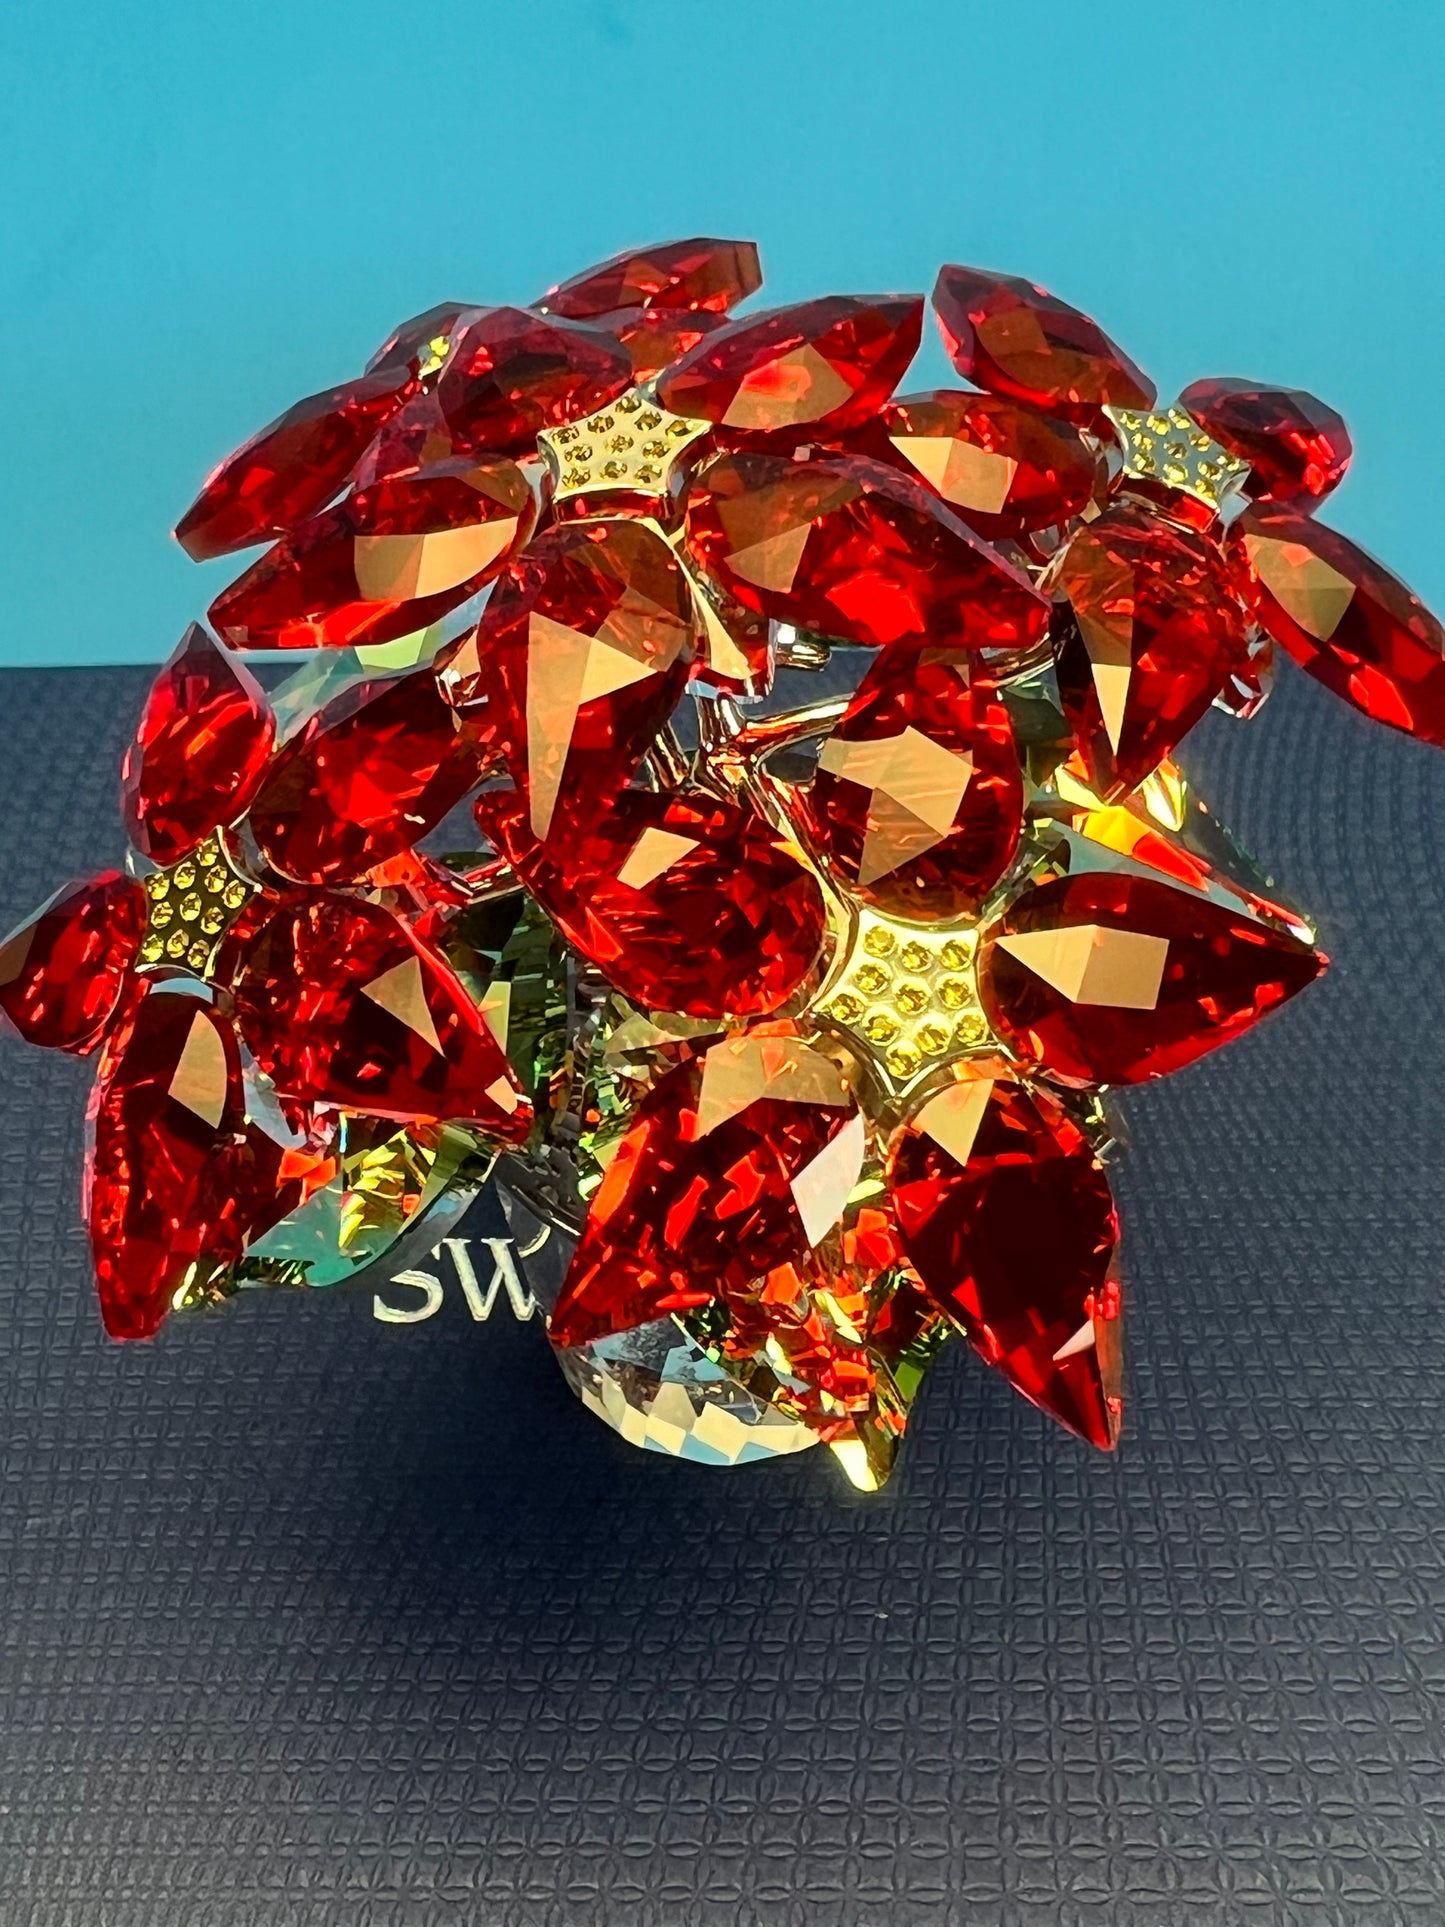 Swarovski 1139997 large Christmas poinsettia flowers no sleeve